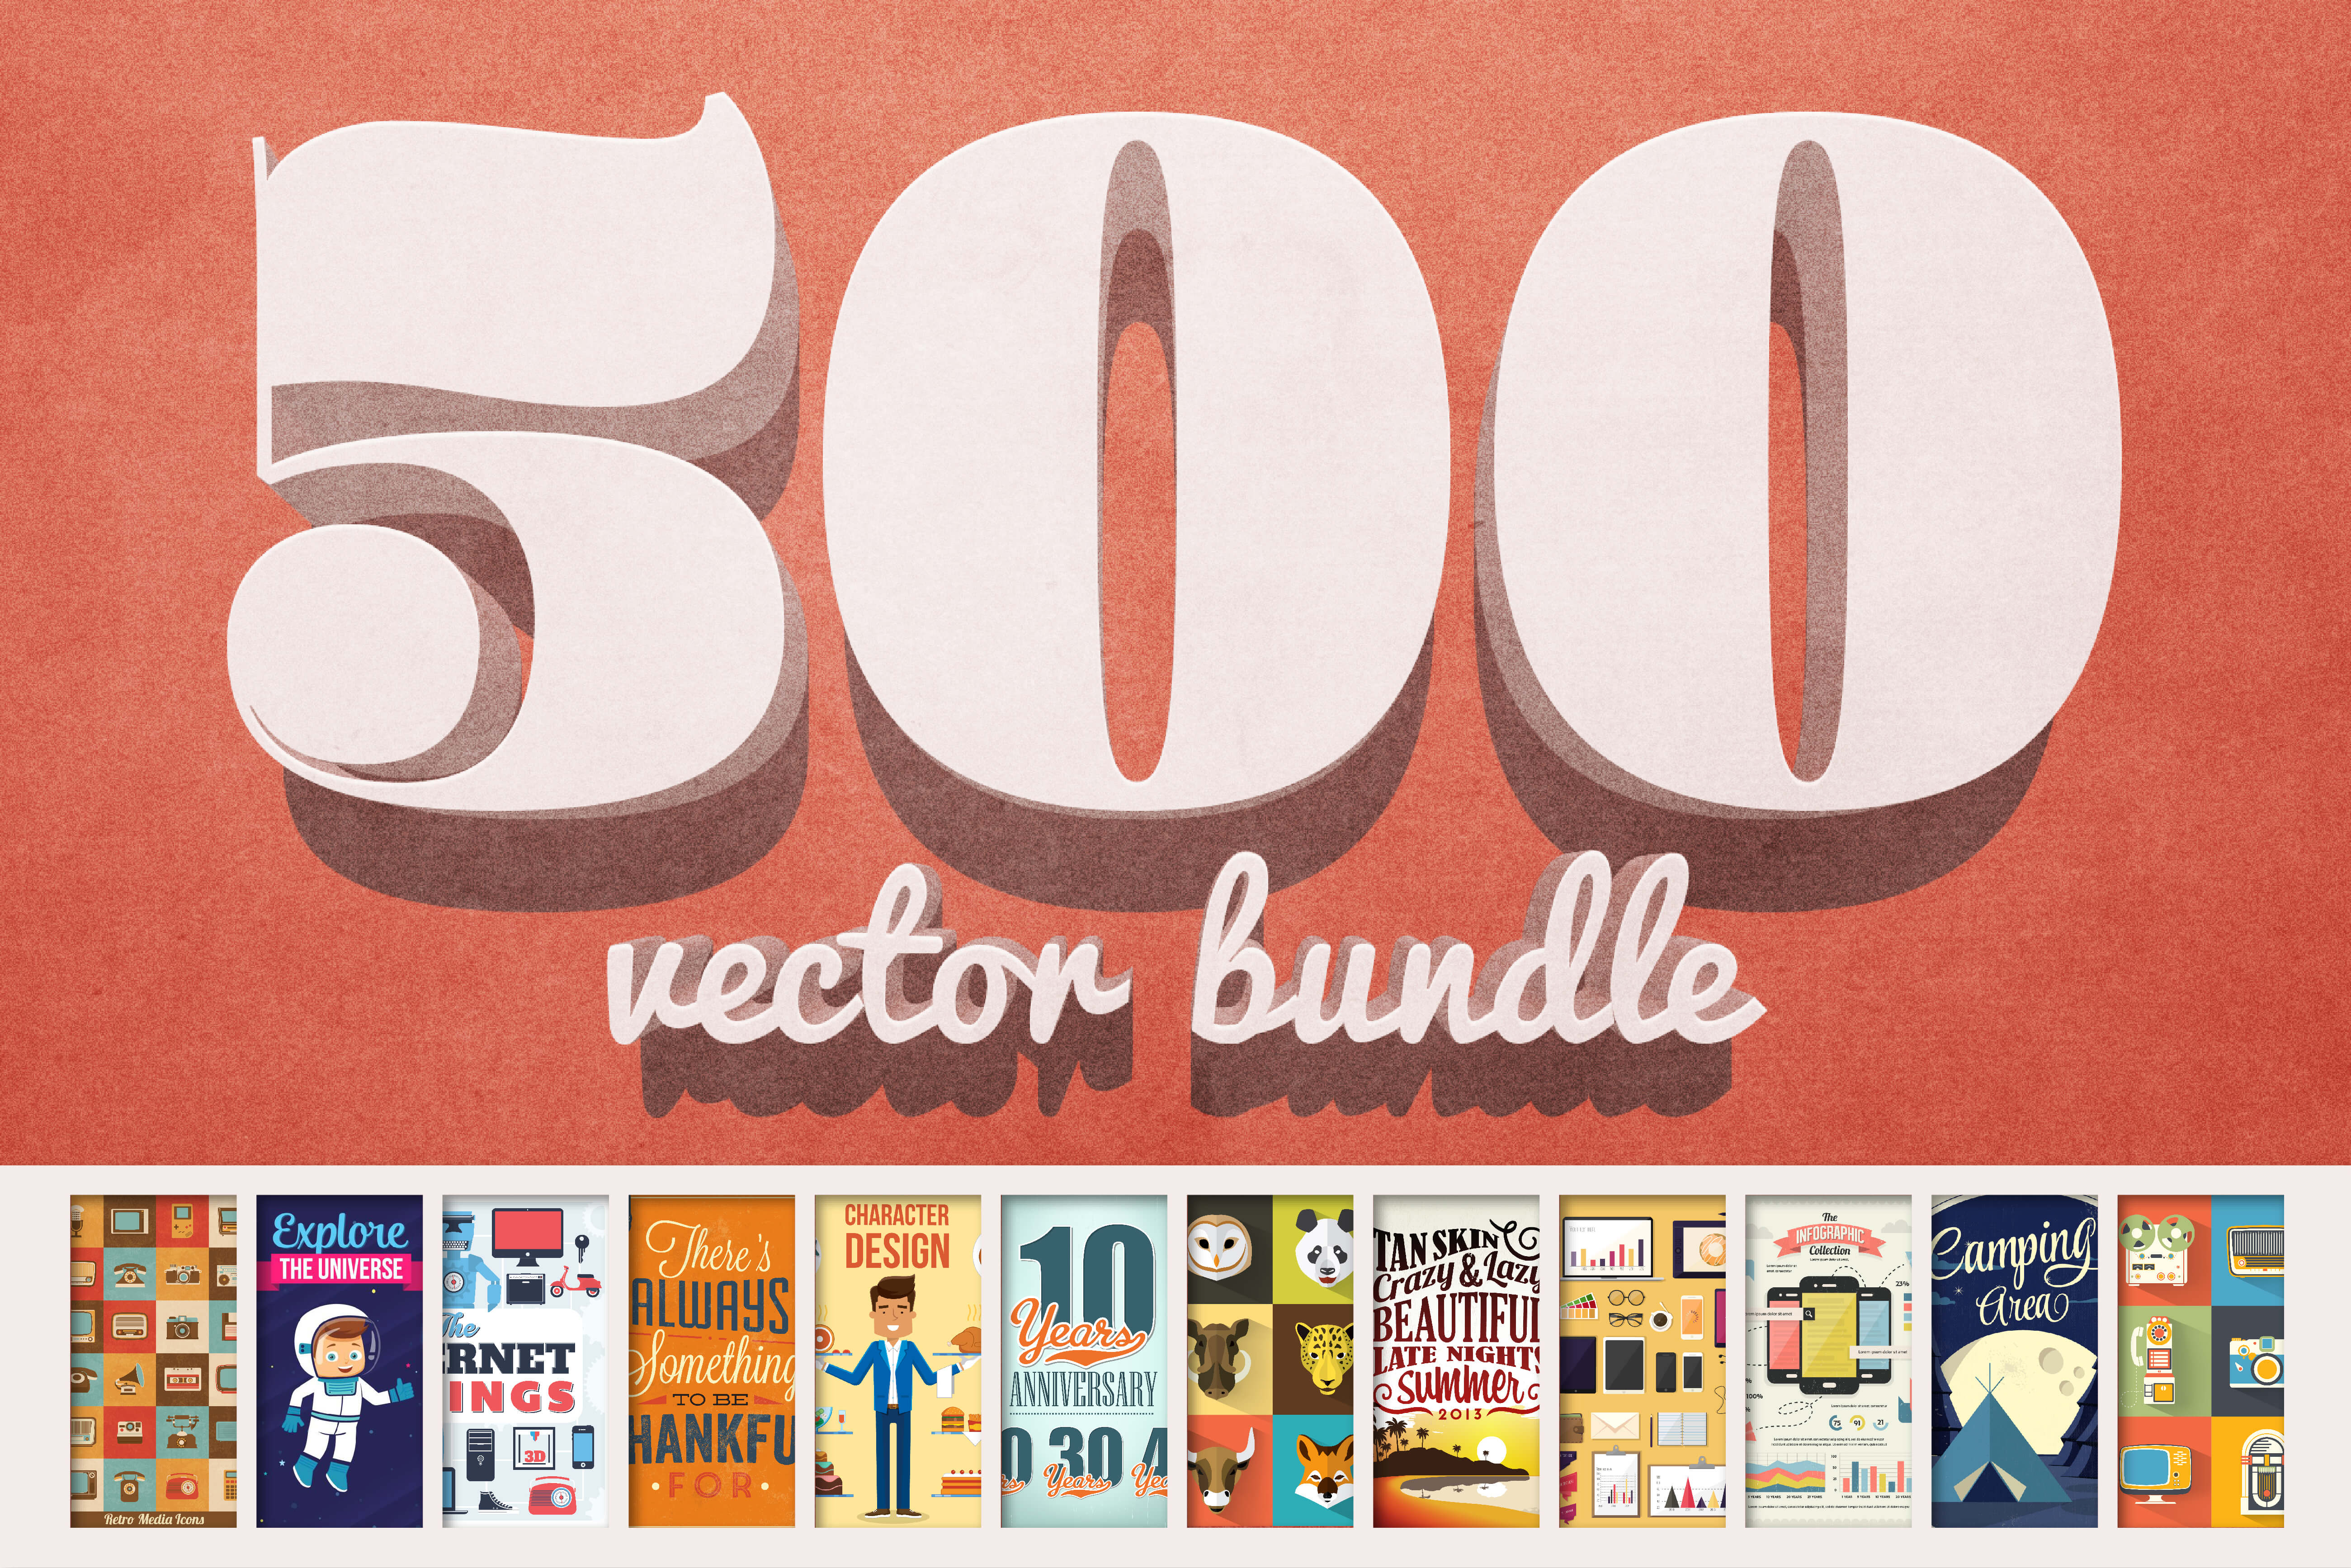 Vectorlicious Bundle: $2,500 Worth of Premium Quality Vectors – only $24!